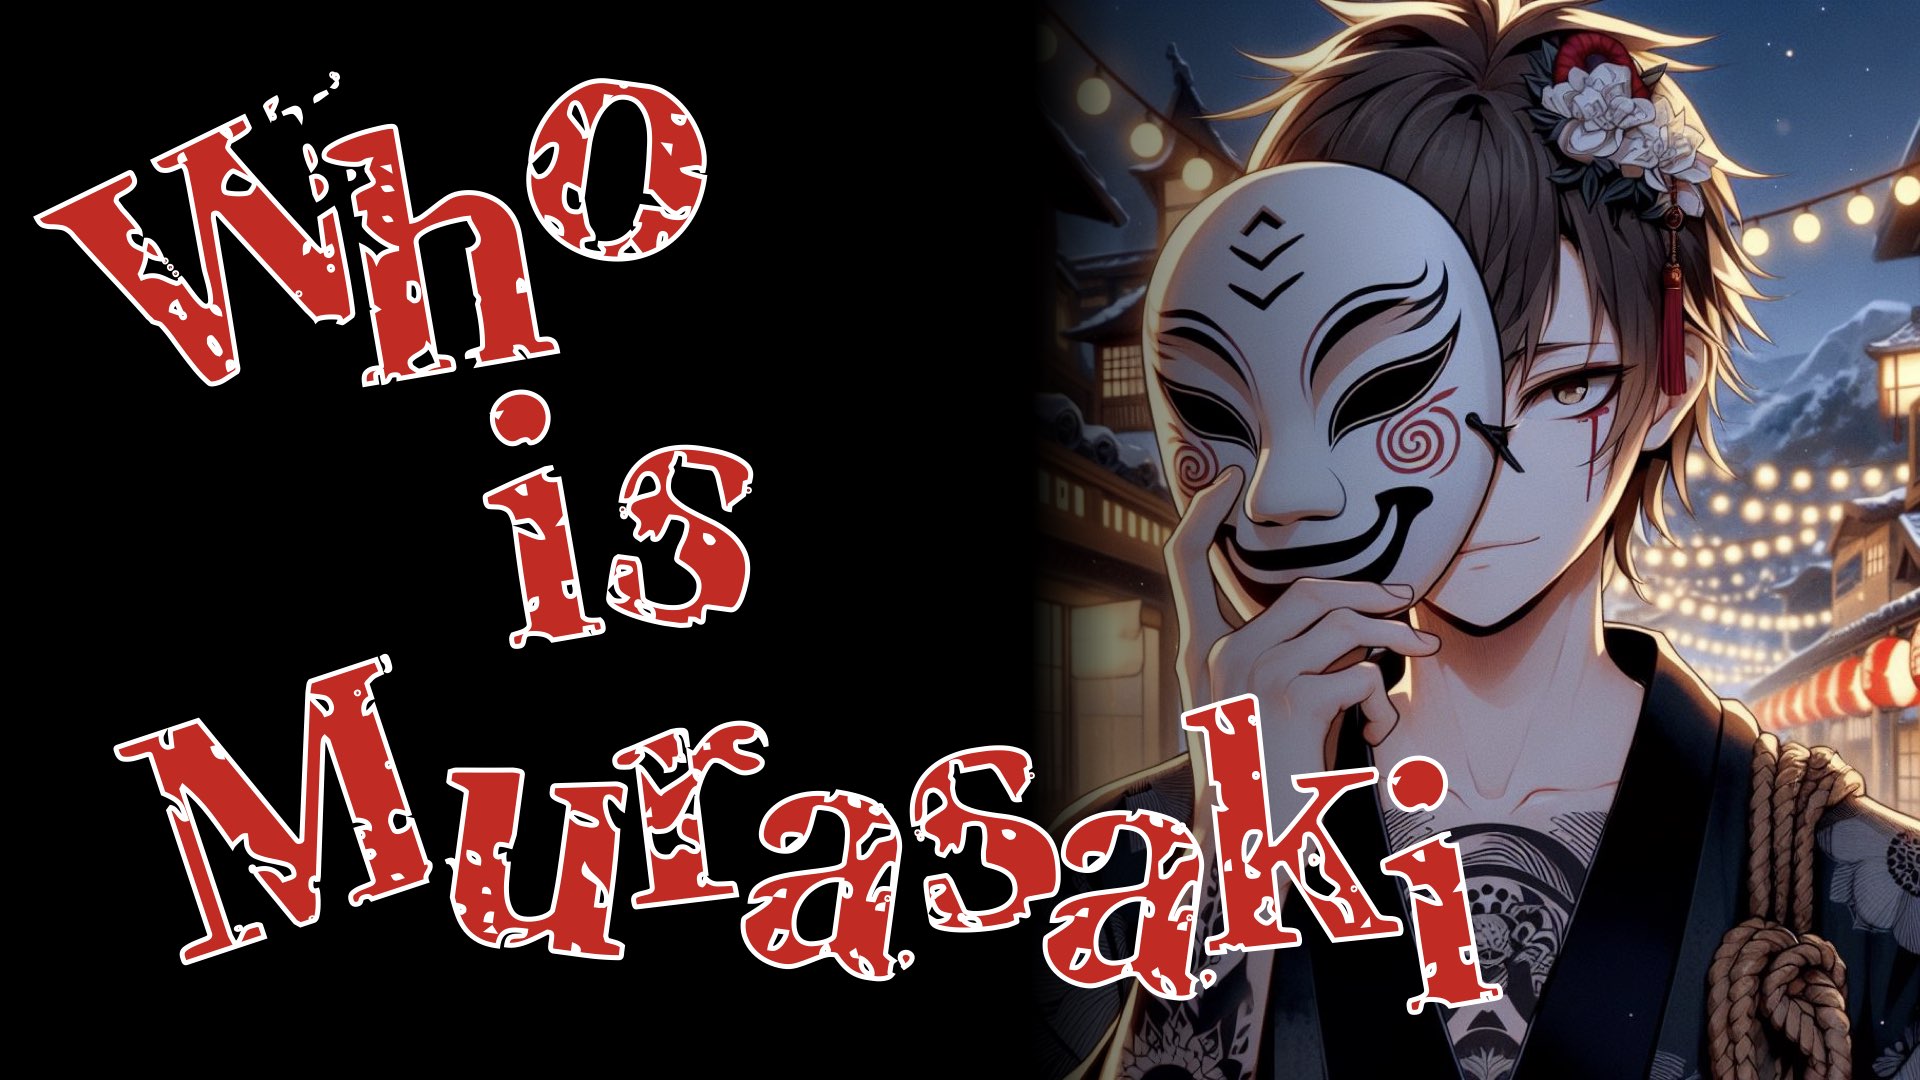 Who is Murasaki?